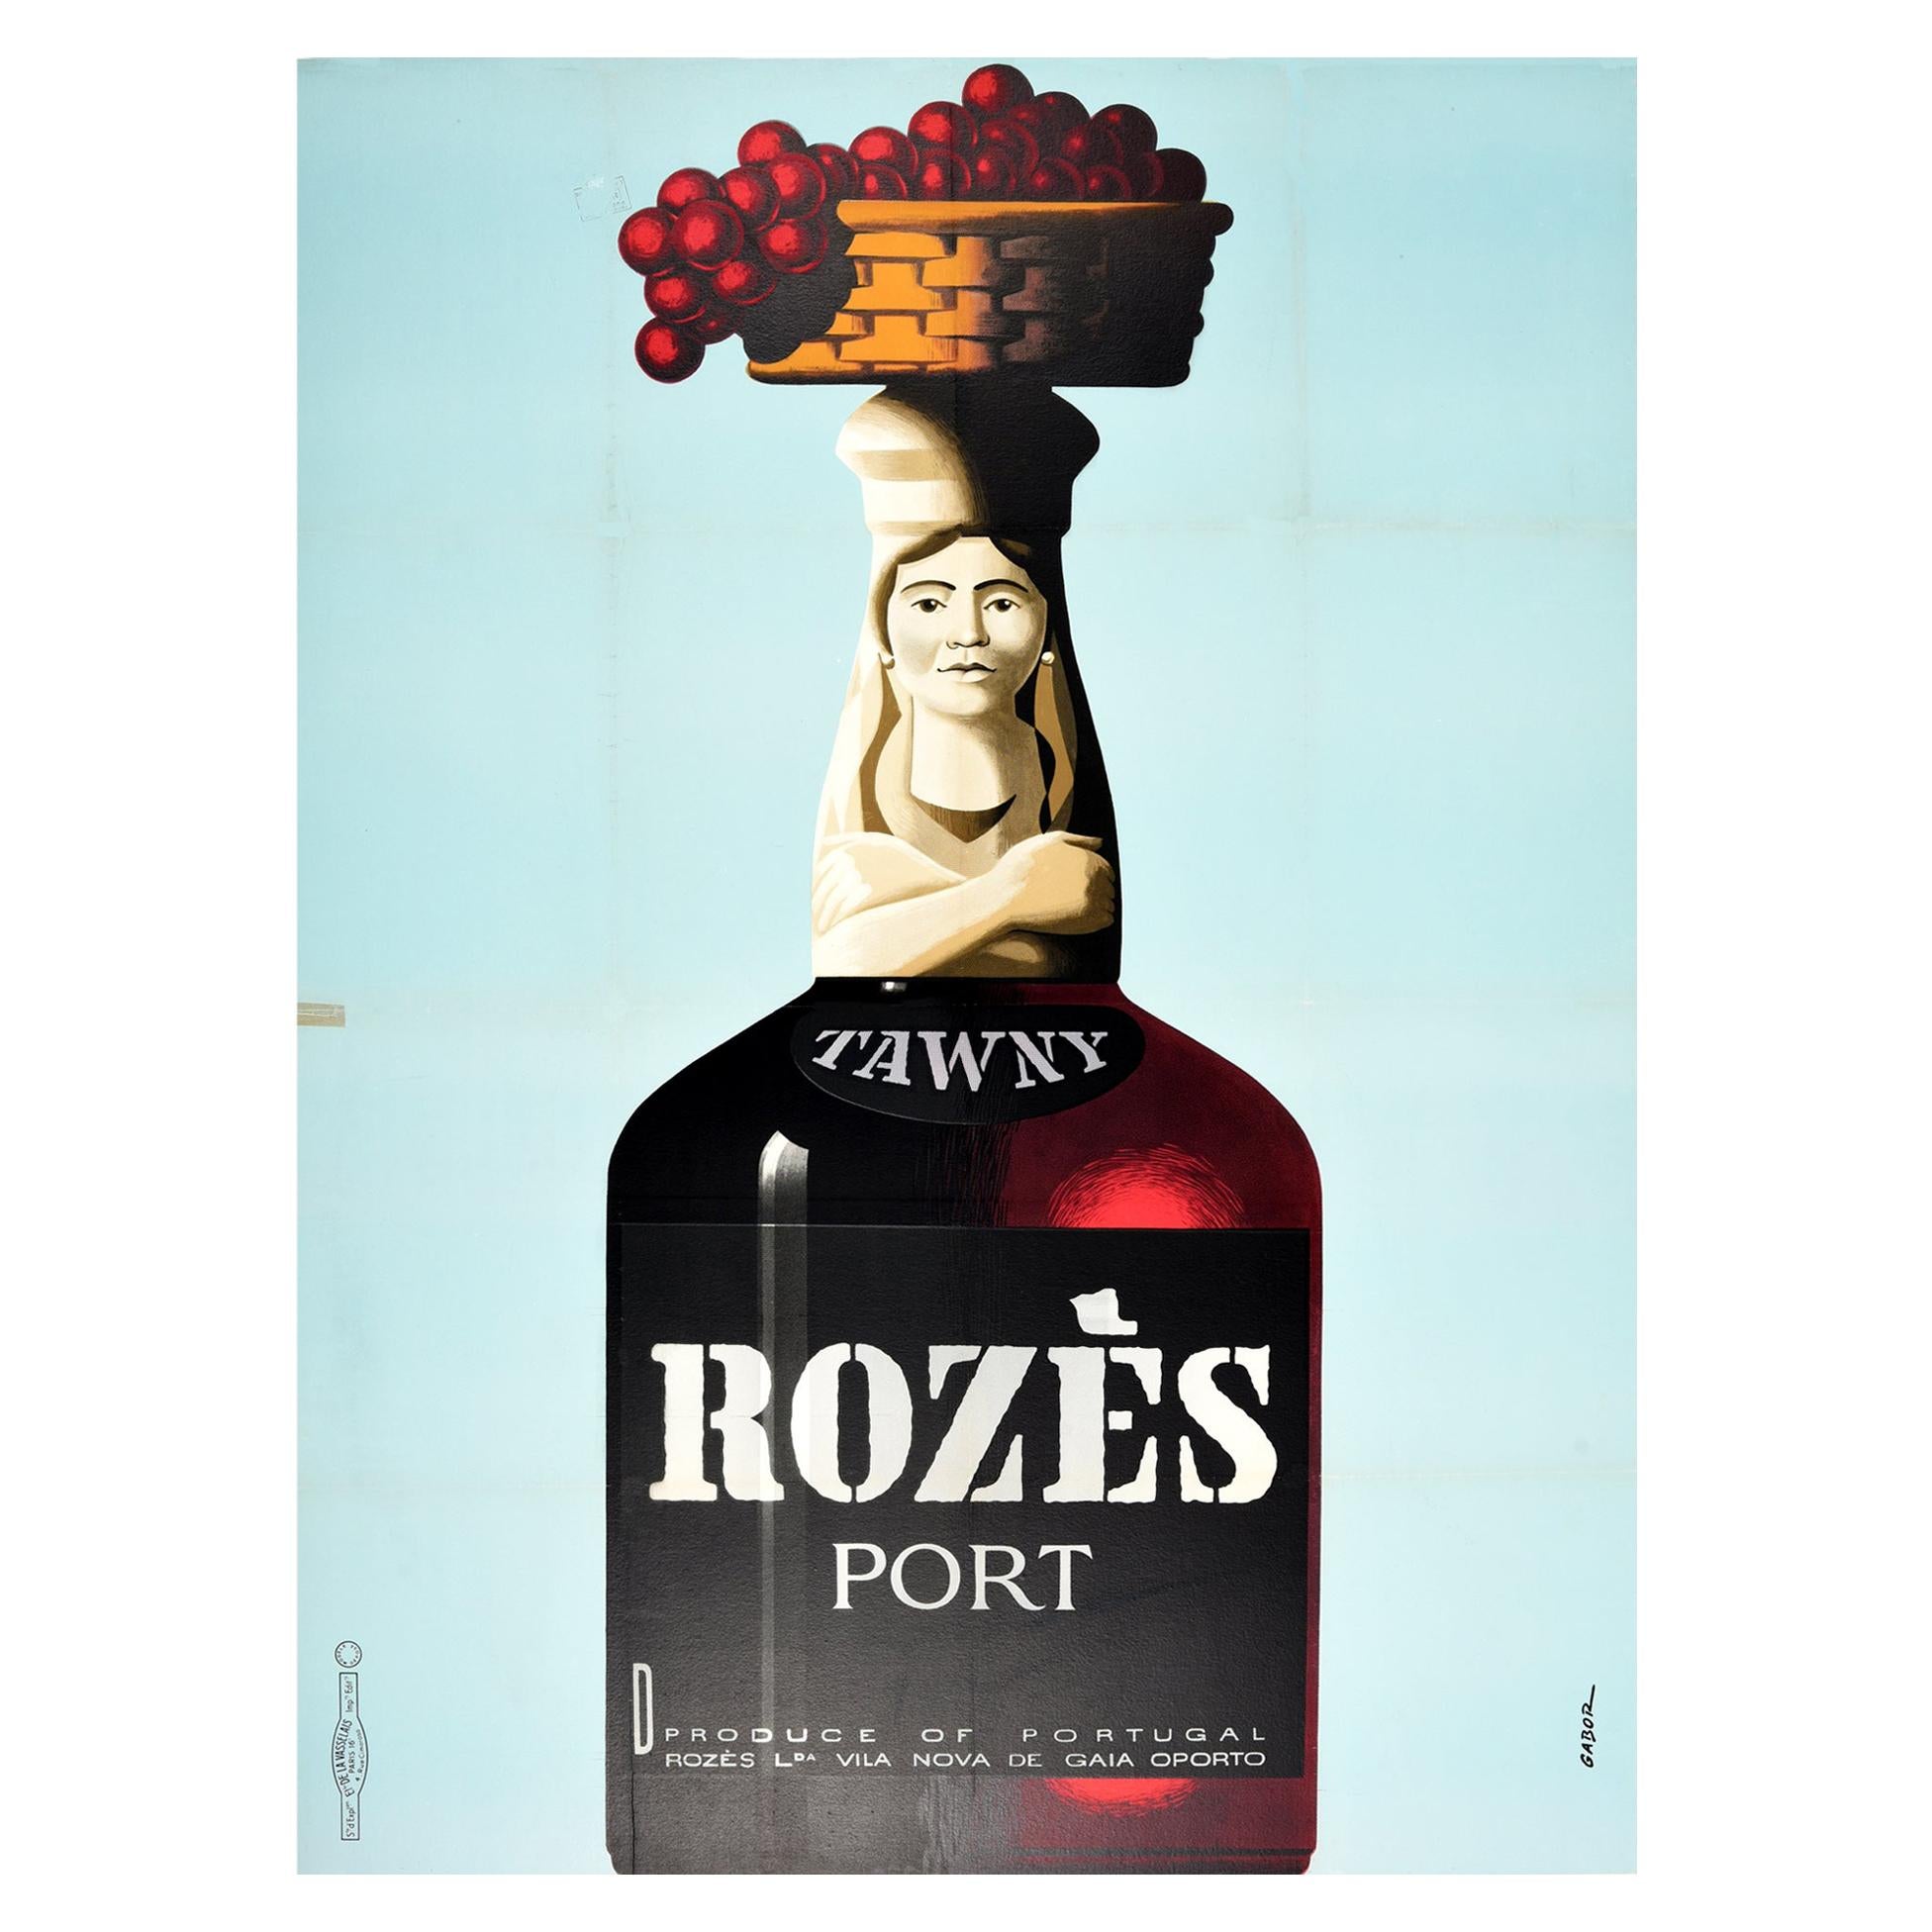 Original Vintage-Werbeplakat „Tawny Rozes“, Vintage-Getränke, Portugal, Oporto